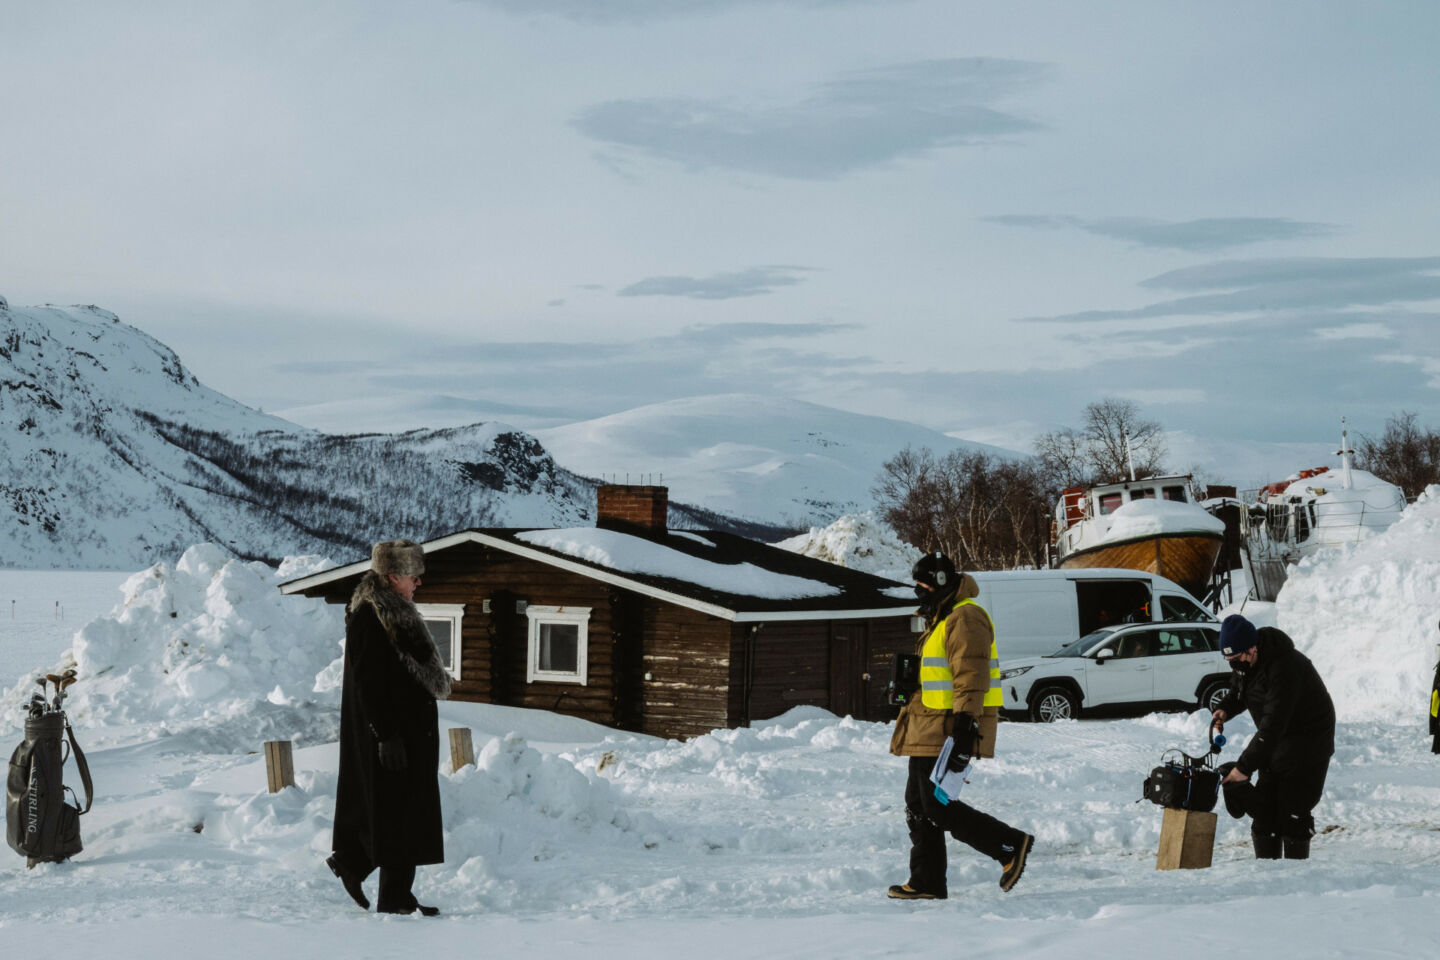 Filming Poromafia in winter in Kilpisjärvi, a Finnish Lapland filming location